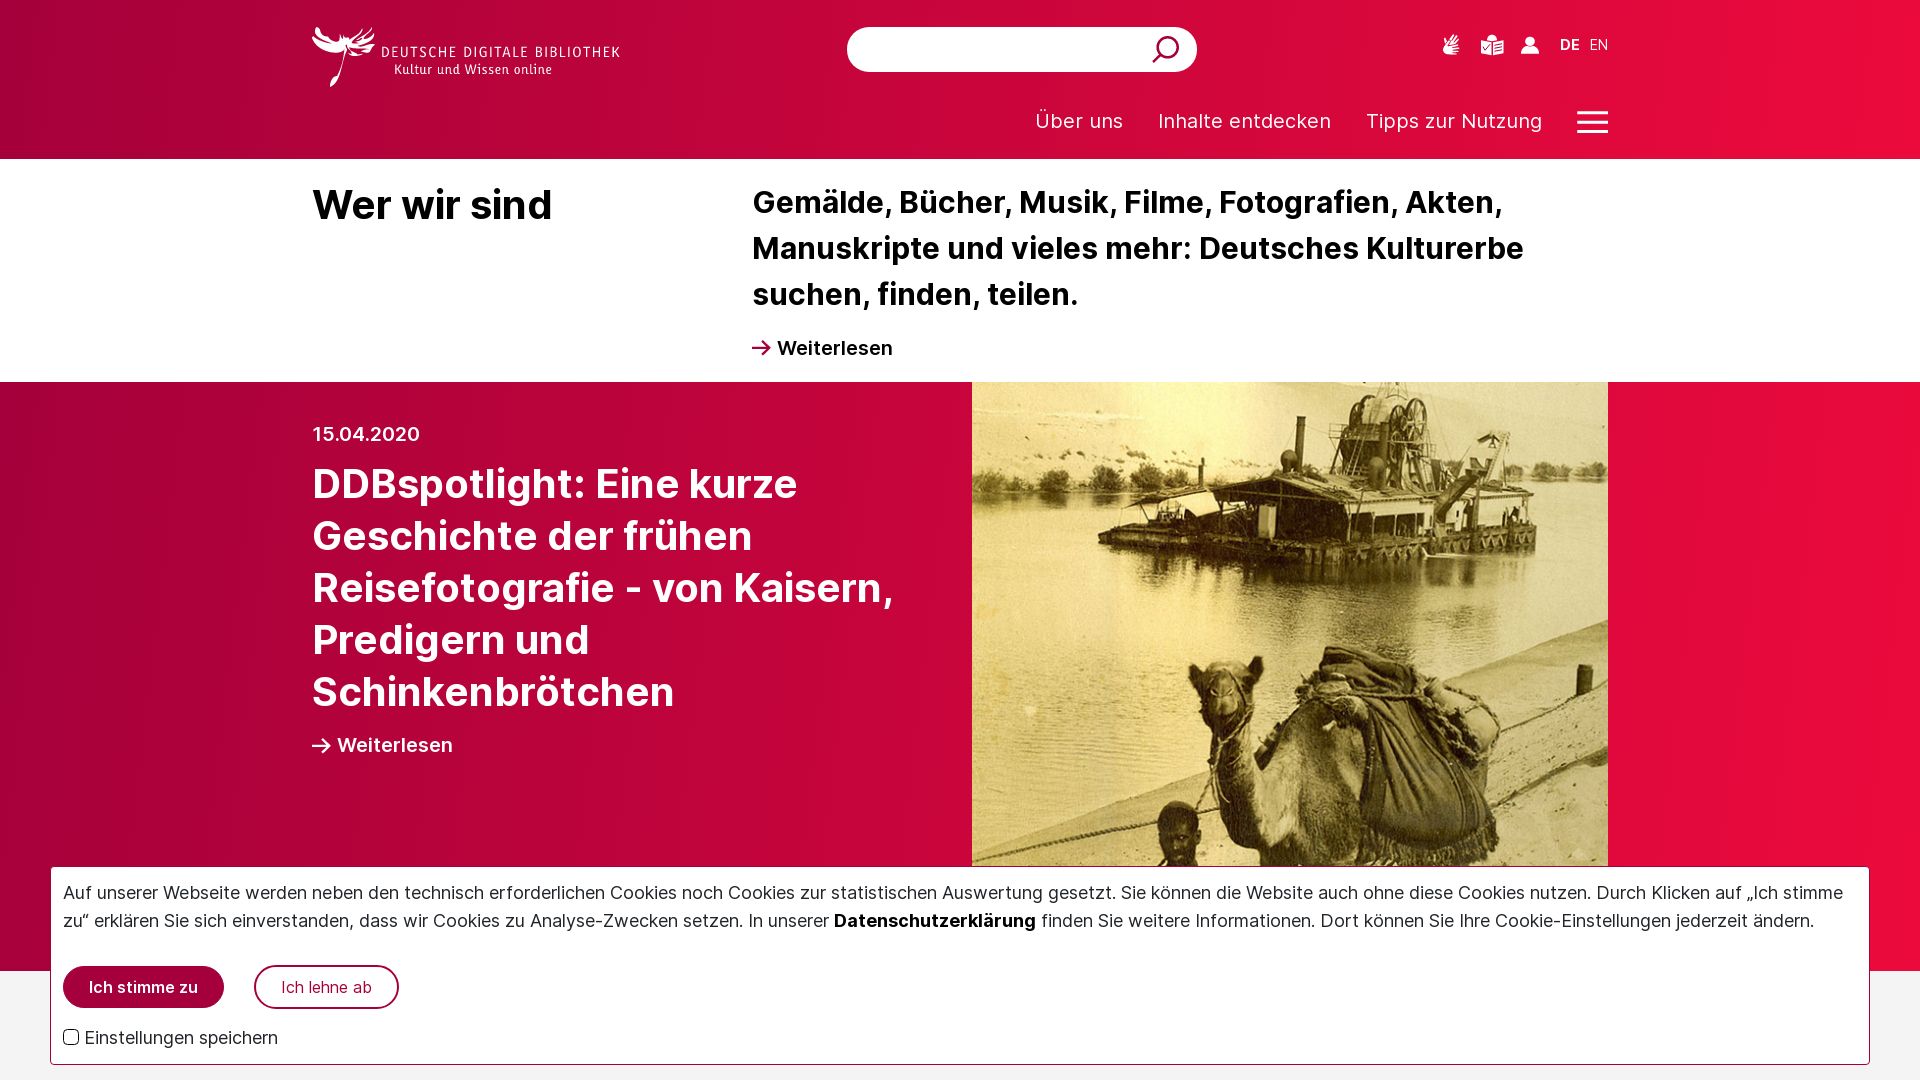 Stato del sito web deutsche-digitale-bibliothek.de è   ONLINE